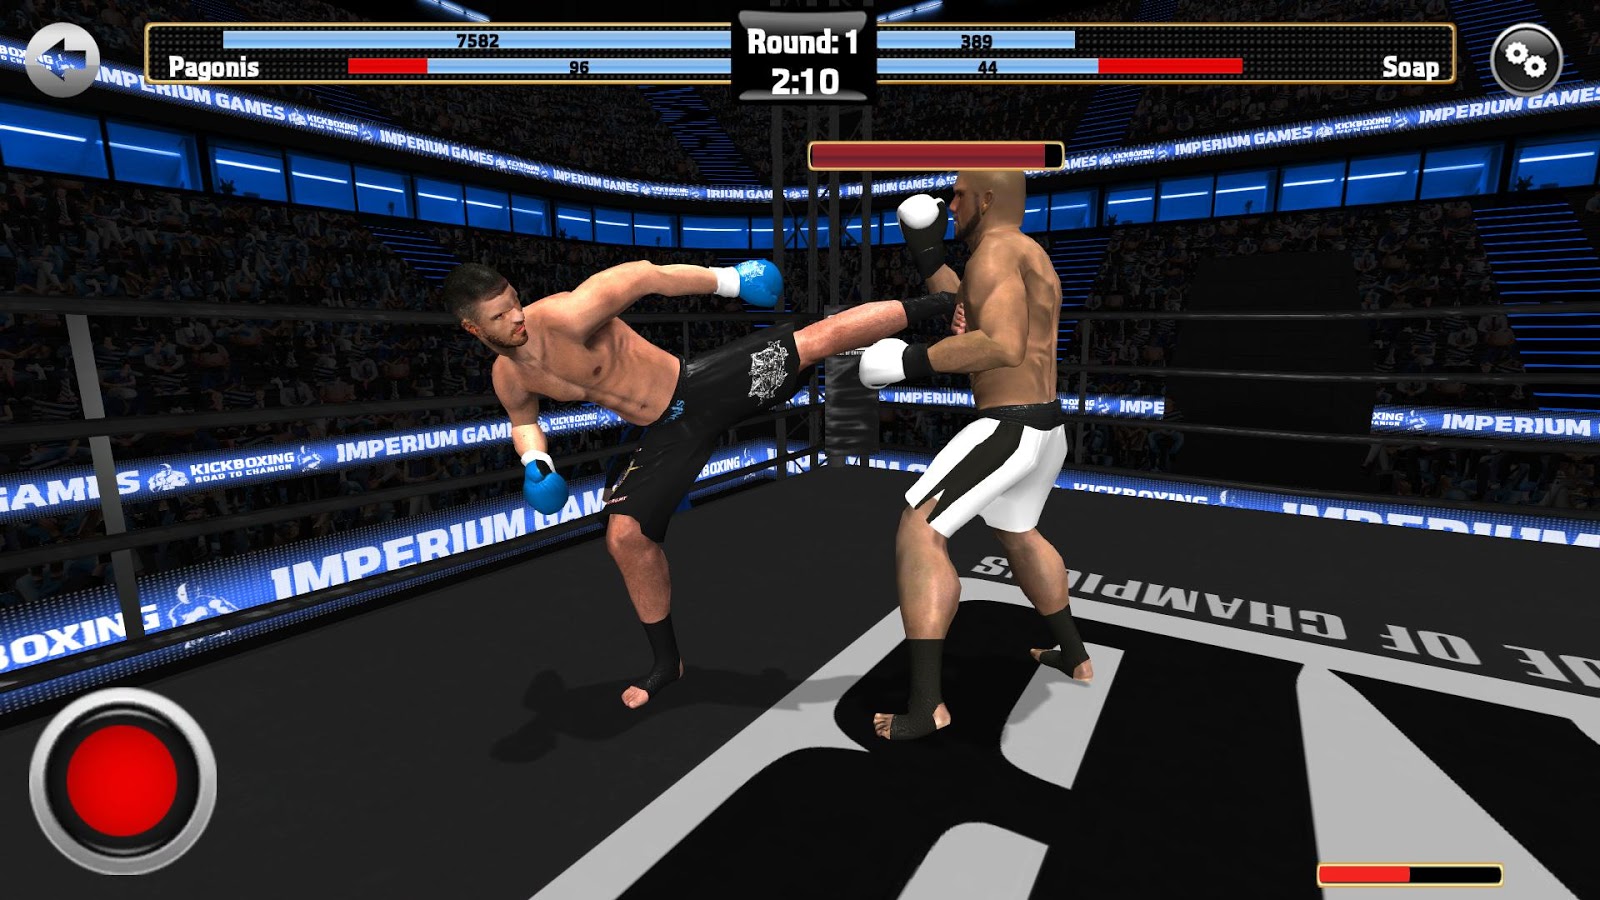    Kickboxing Fighting - RTC Pro- screenshot  